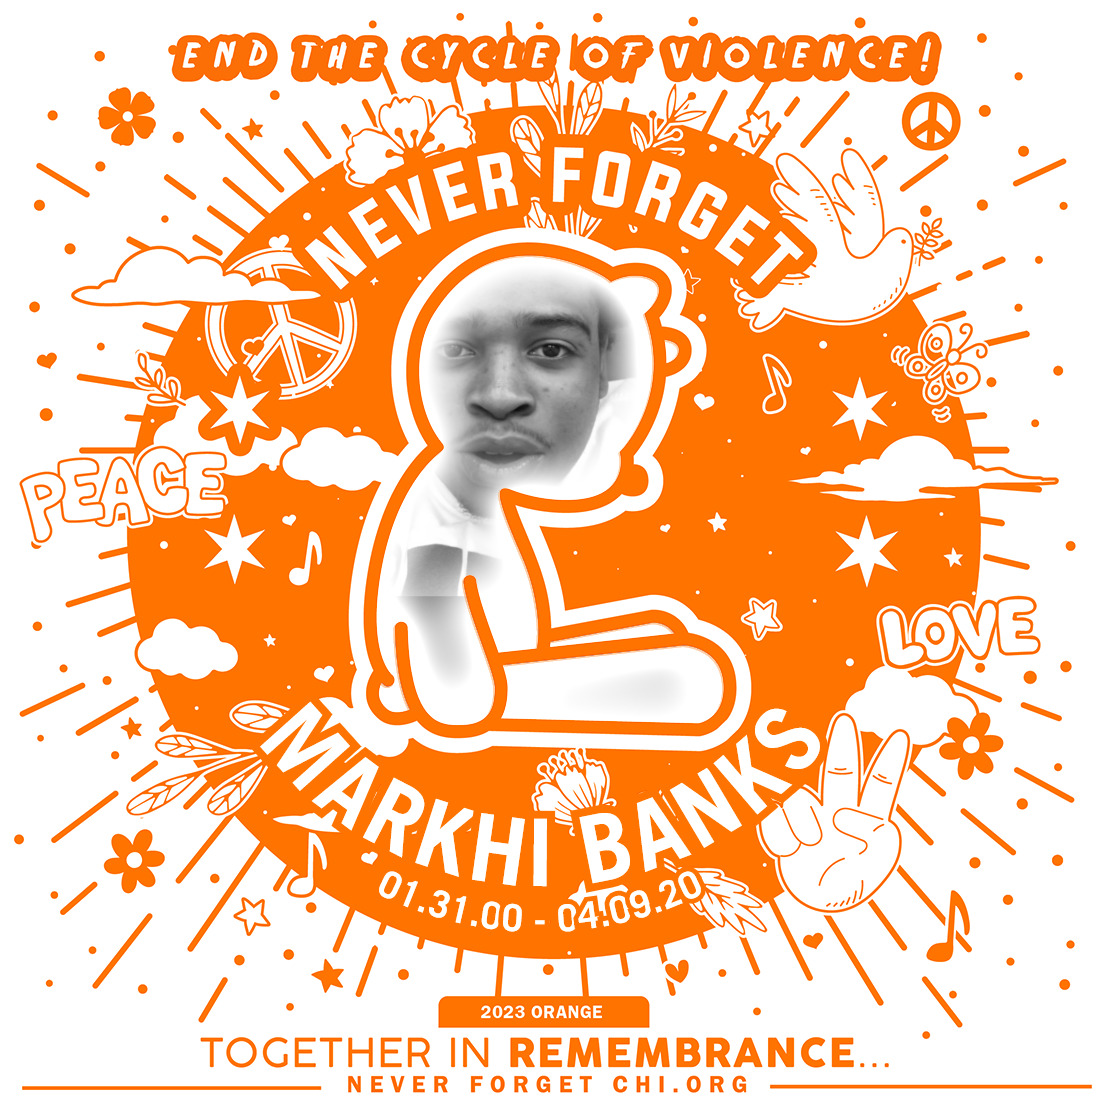 Markhi Banks